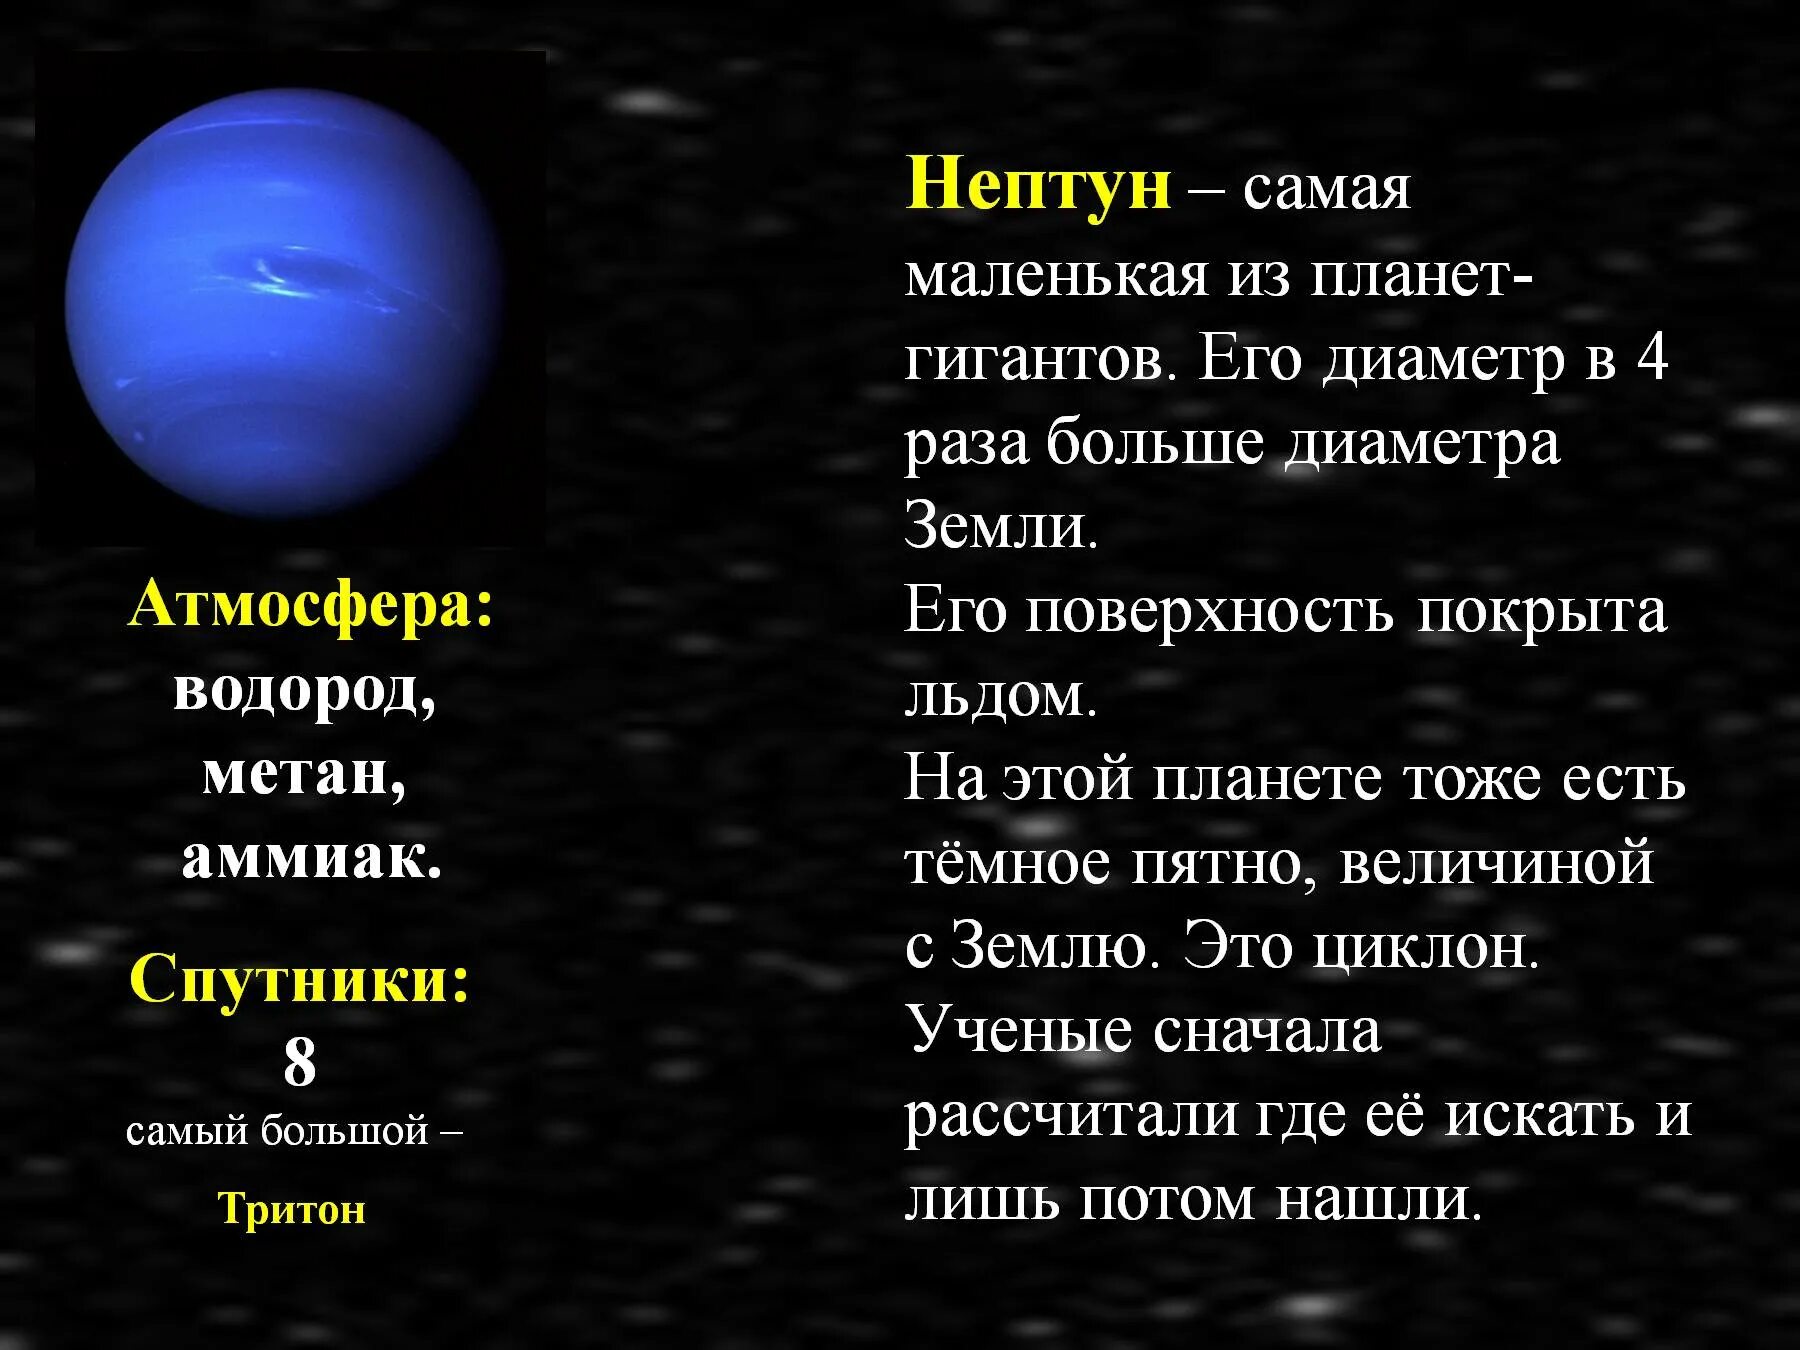 Планета нептун и плутон. Планеты гиганты Юпитер Сатурн Уран Нептун. Планеты гиганты солнечной системы Нептун. Нептун самая маленькая Планета гигант солнечной. Спутники Нептуна самый большой Спутник Тритон.